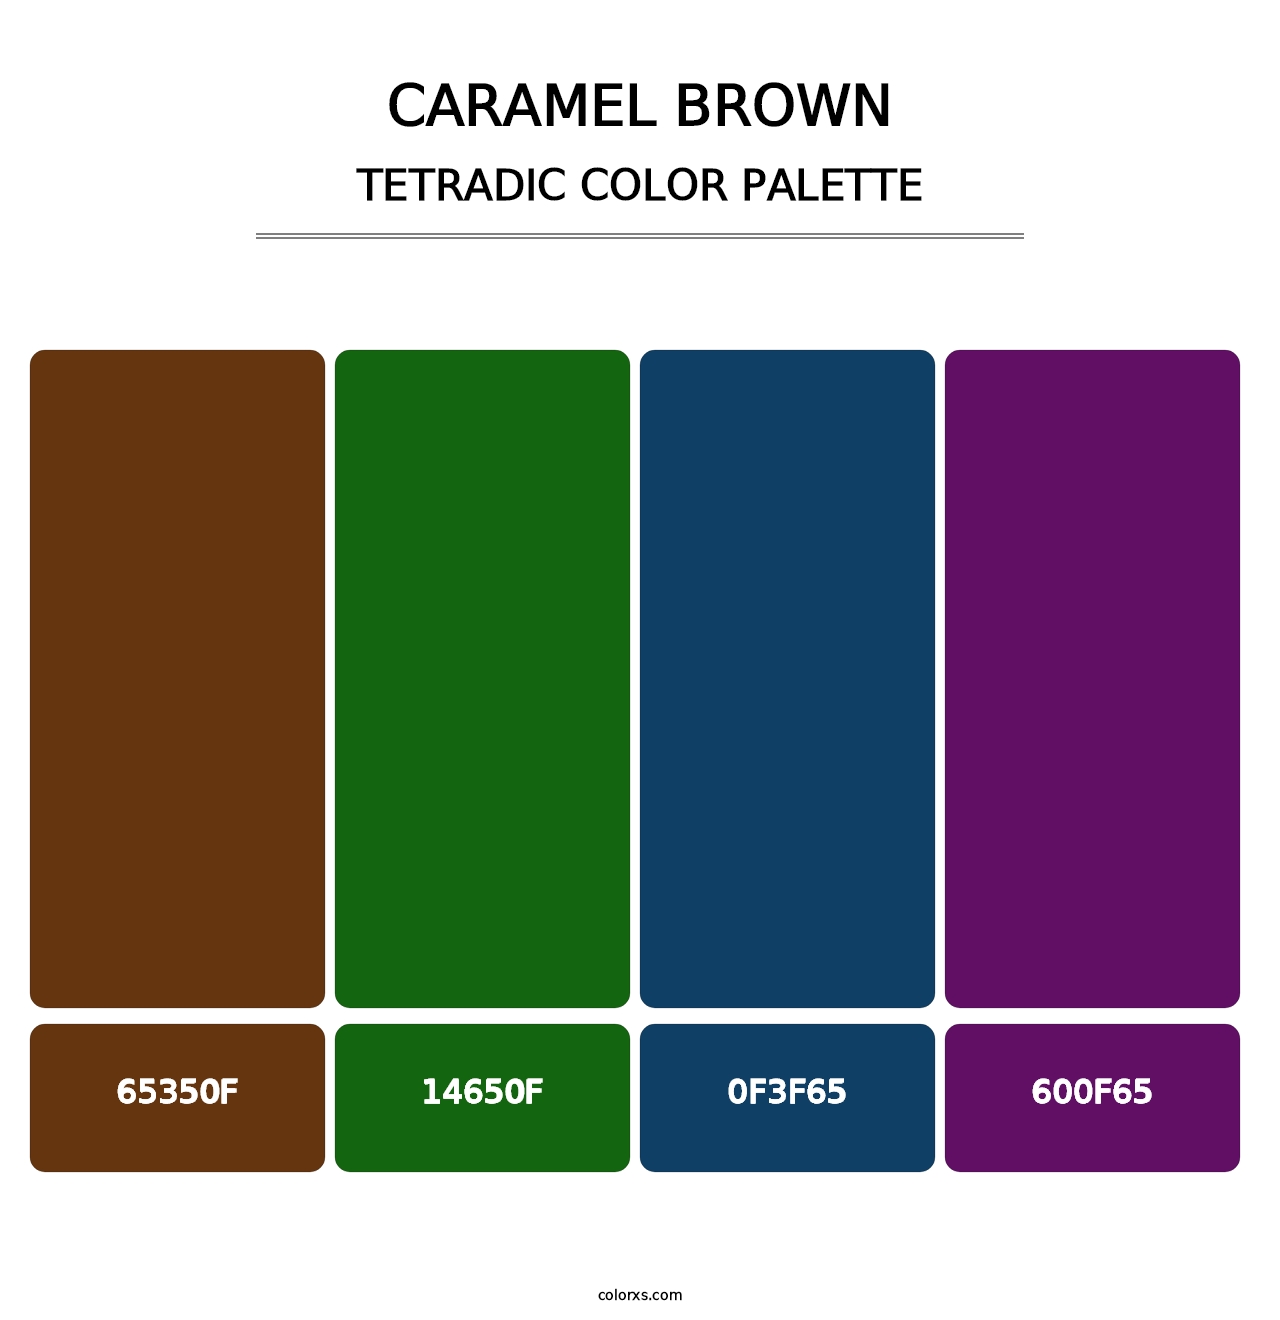 Caramel Brown - Tetradic Color Palette